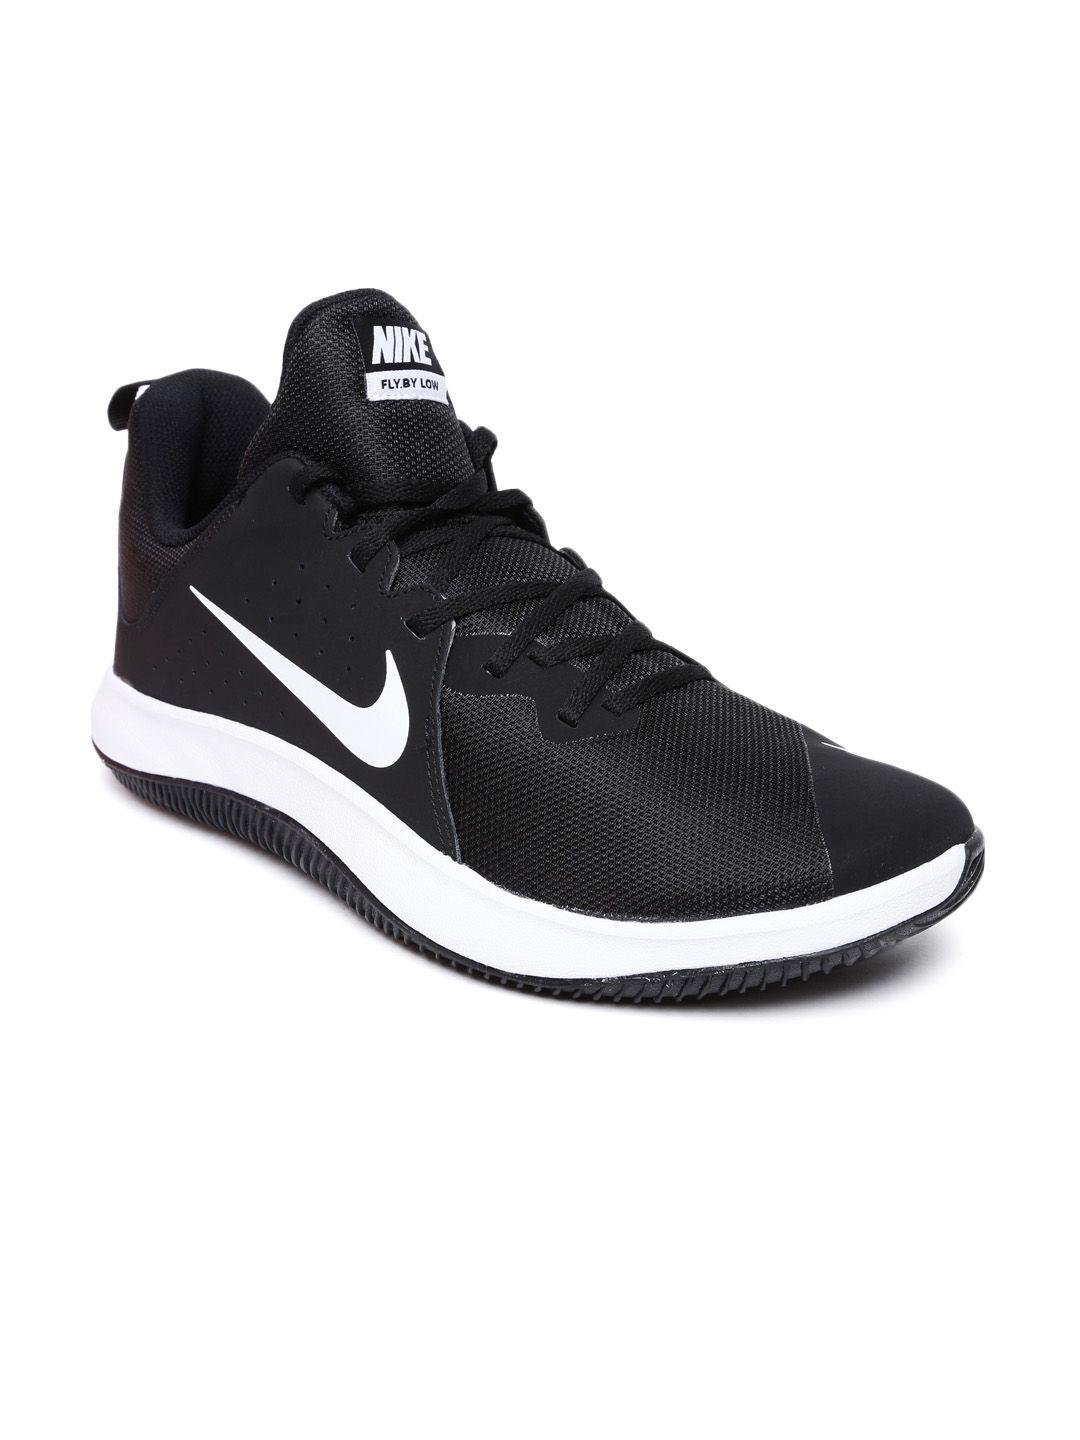 Black and White Shoe Logo - Nike Shoes - Buy Nike Shoes for Men & Women Online | Myntra